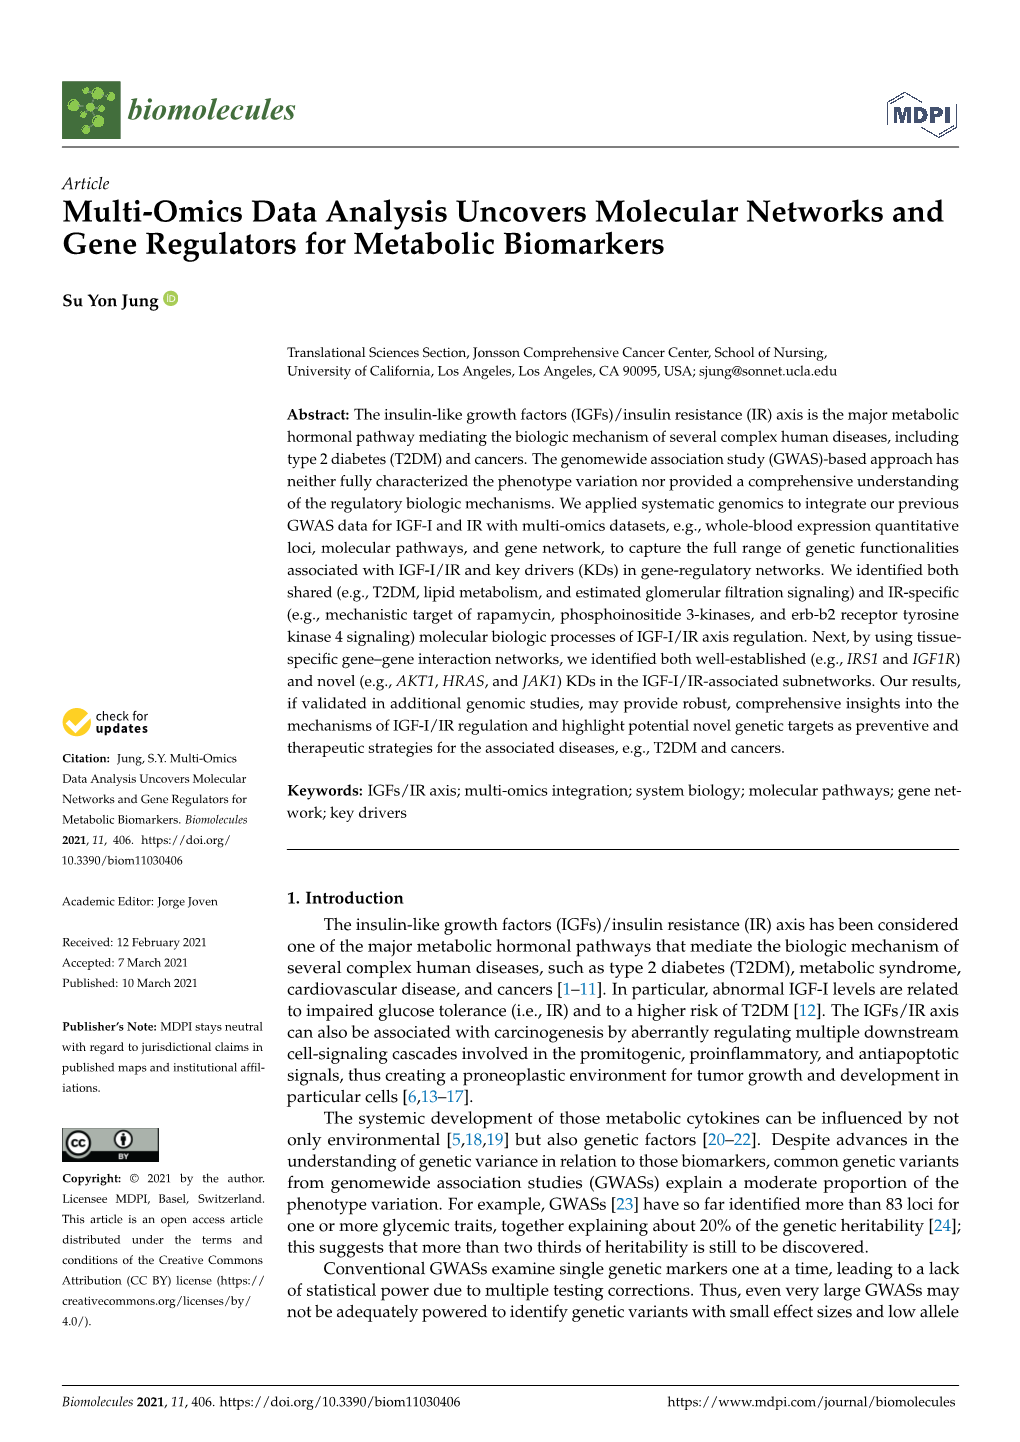 Multi-Omics Data Analysis Uncovers Molecular Networks and Gene Regulators for Metabolic Biomarkers